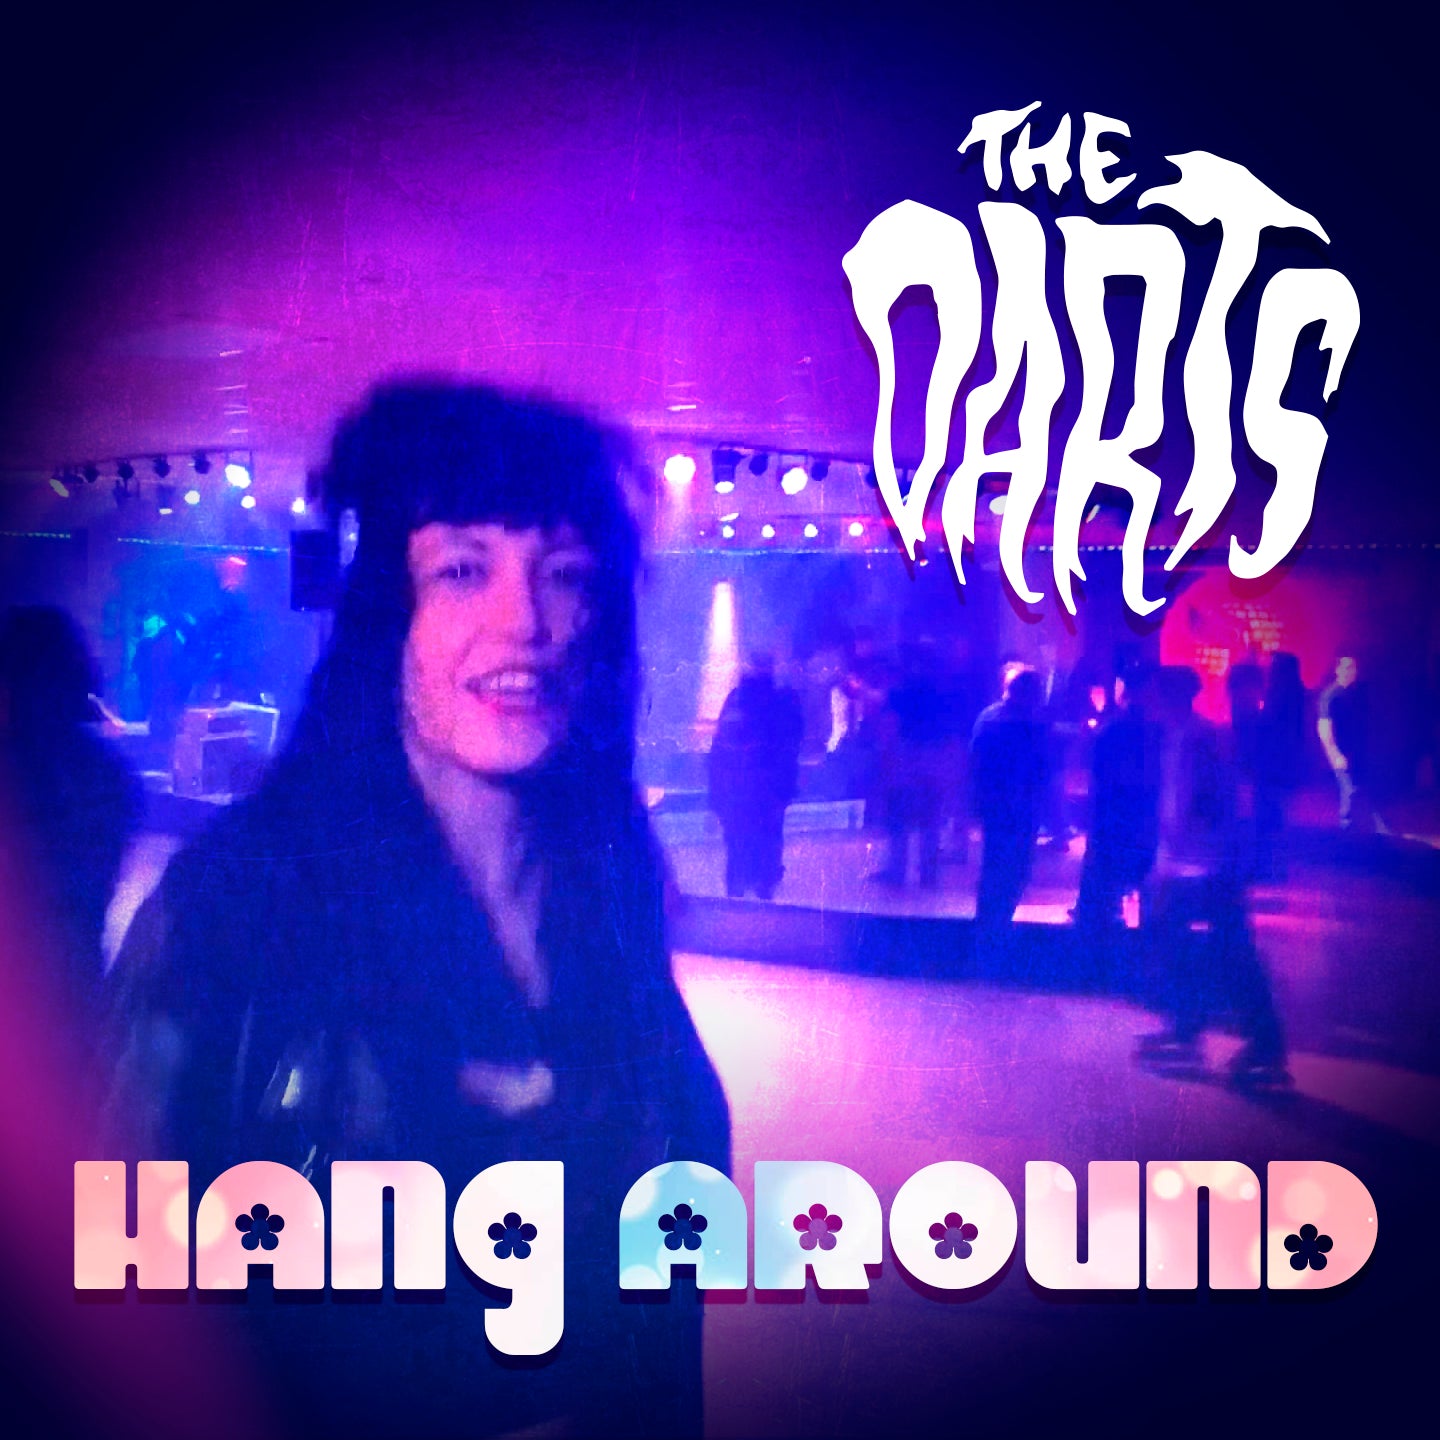 NEW VIDEO: THE DARTS "HANG AROUND"